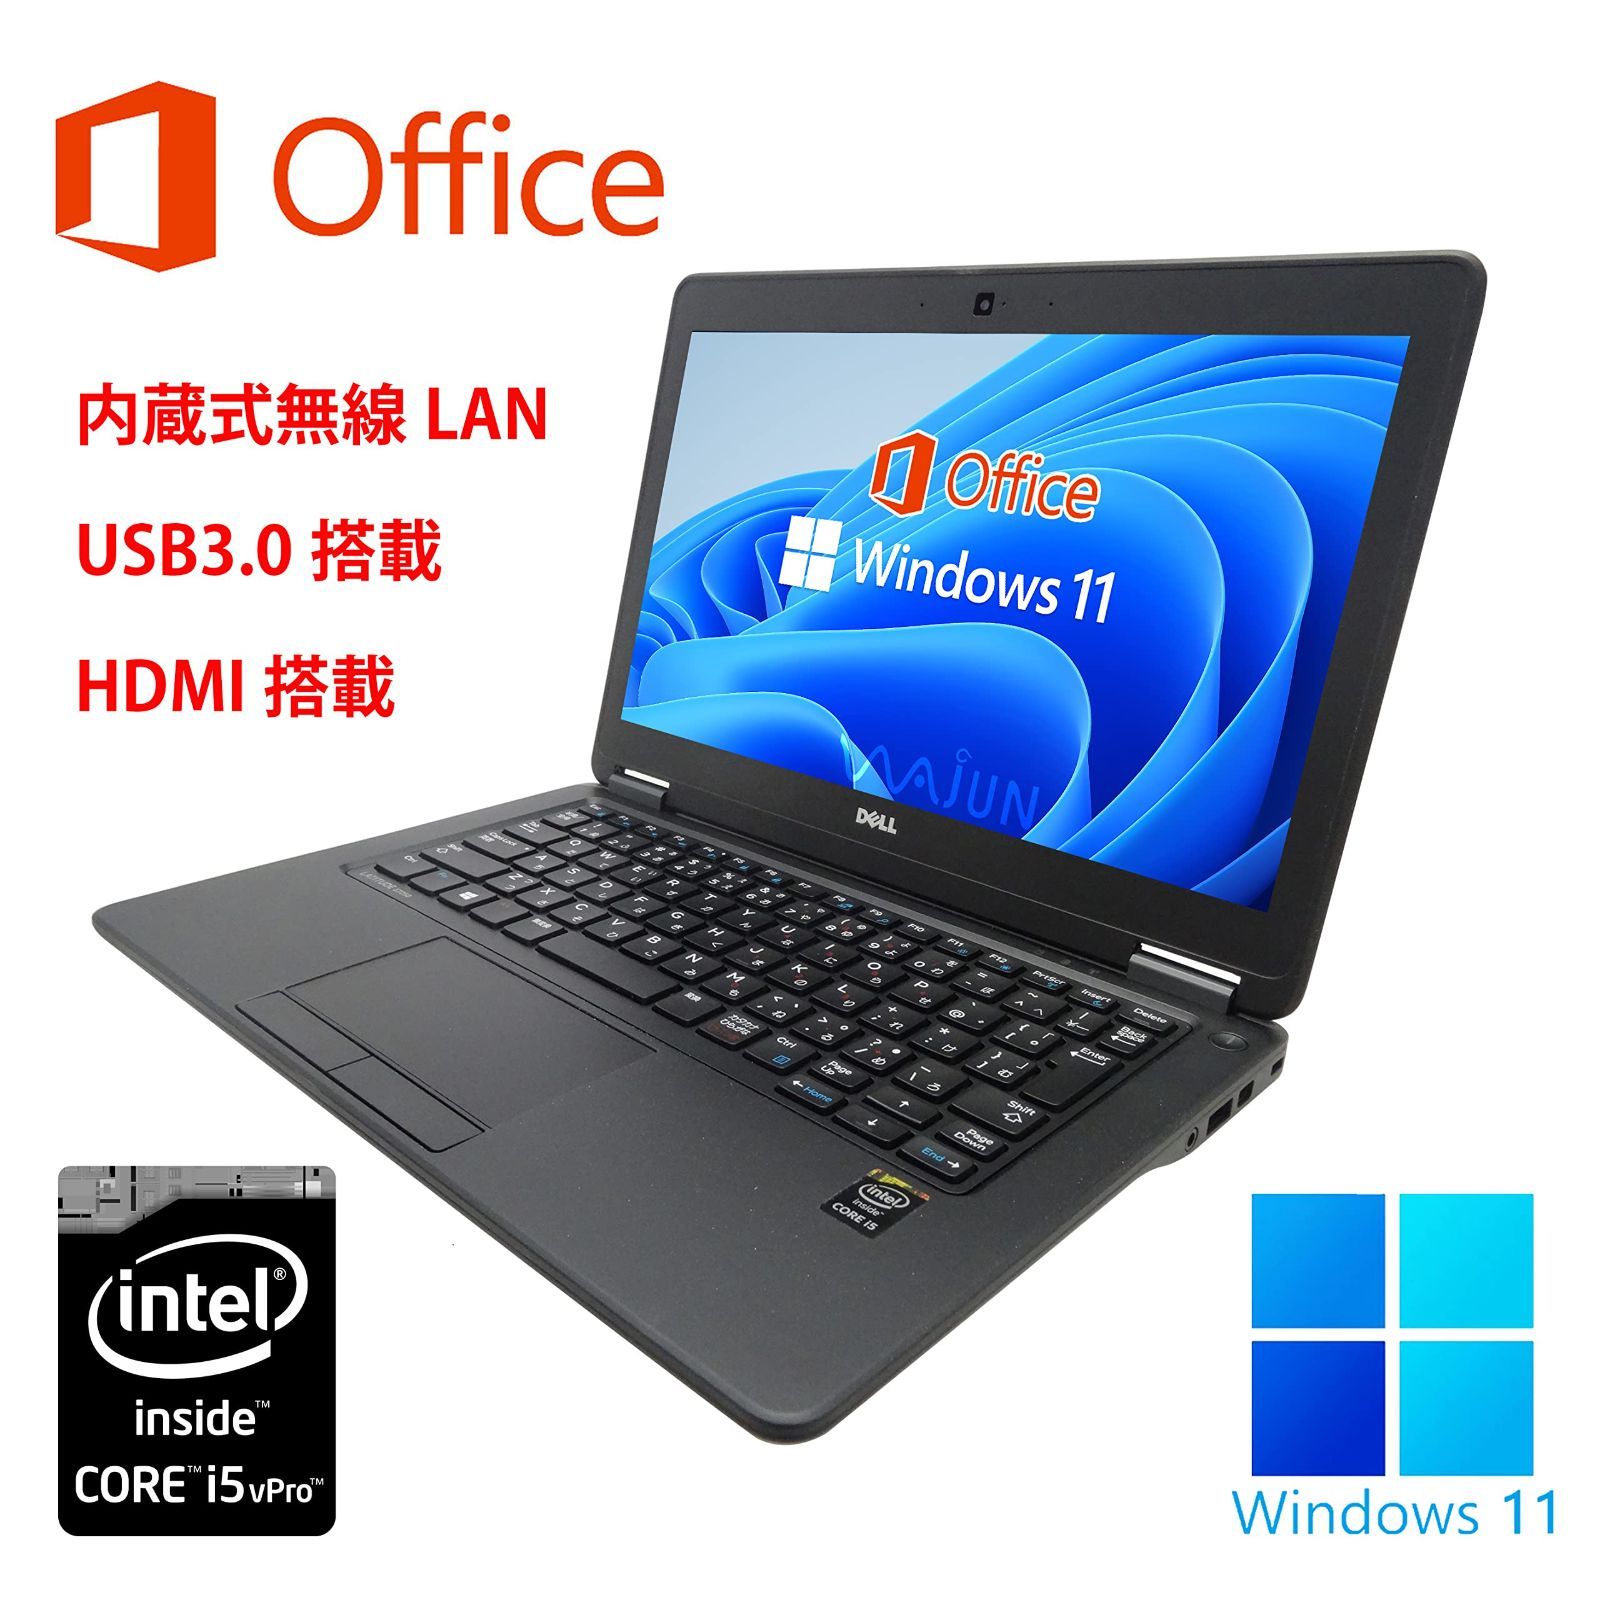 特価セール】DELL ノートPC E7250/E7270/12.5型/Win 11 Pro/MS Office